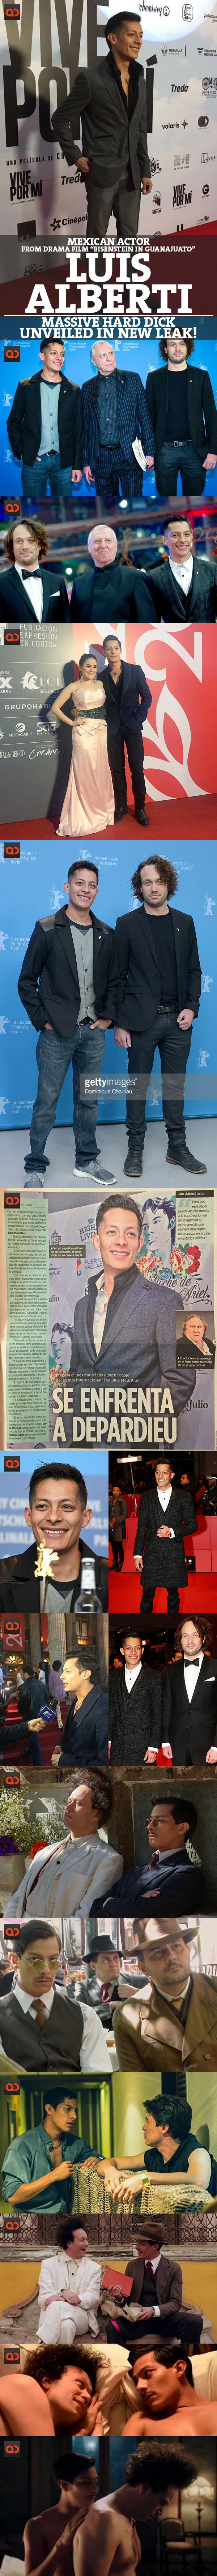 Luis Alberti, Mexican Actor From Drama Film “Eisenstein In Guanajuato”, Massive Hard Dick Unveiled In New Leak!